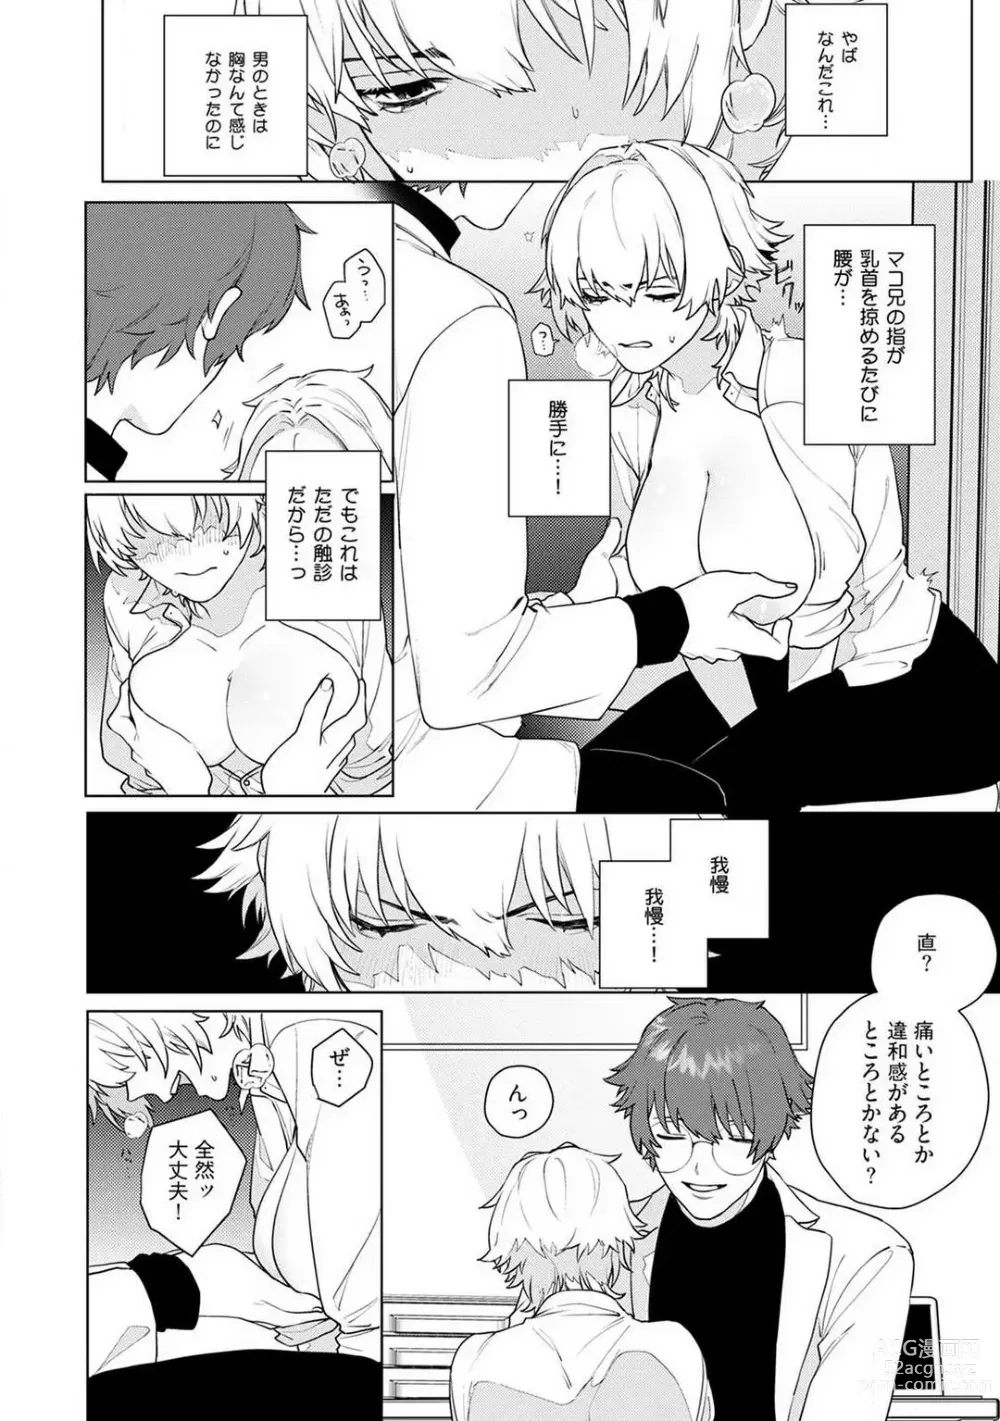 Page 18 of manga Onnanoko no Karada 1-3